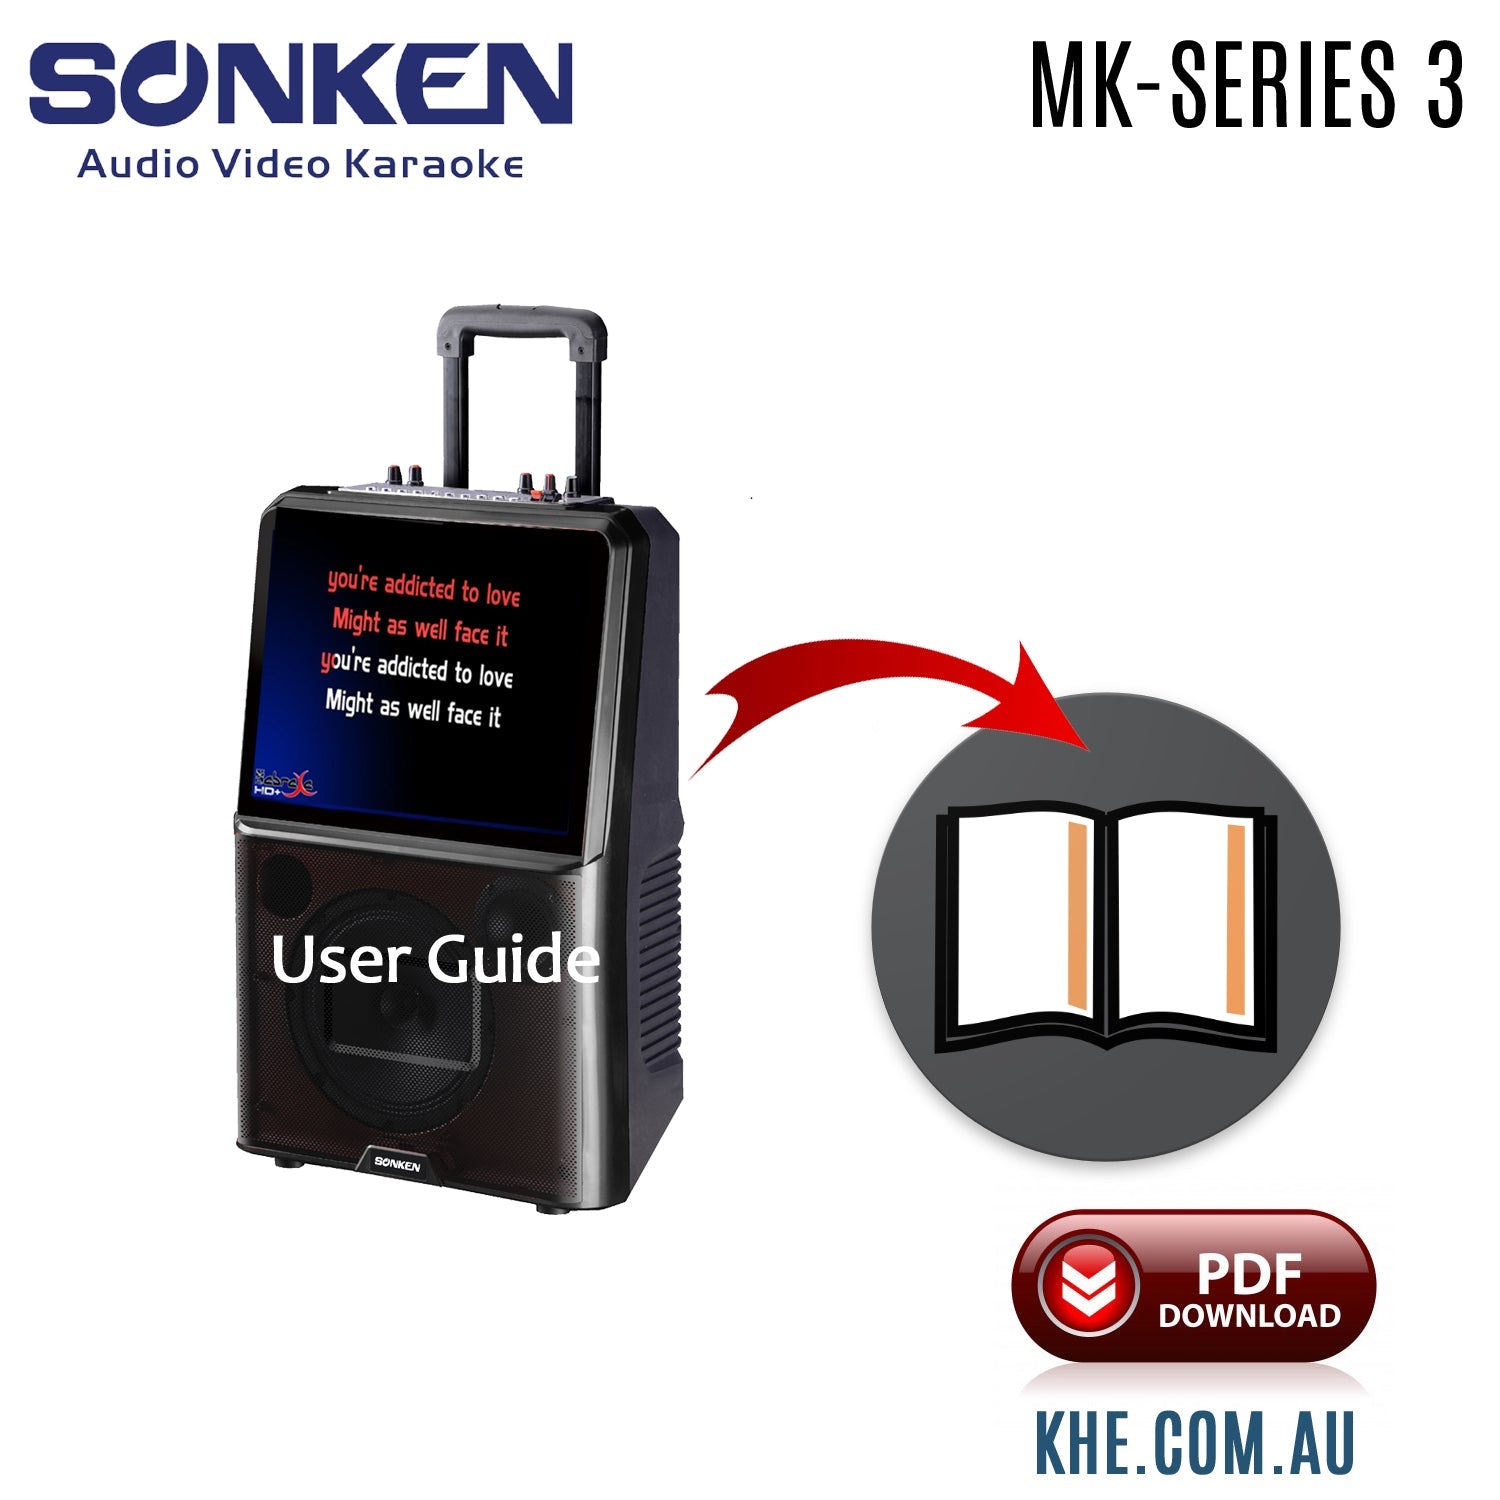 How To Connect Guide - Sonken Max Karaoke Series 3 - Karaoke Home Entertainment